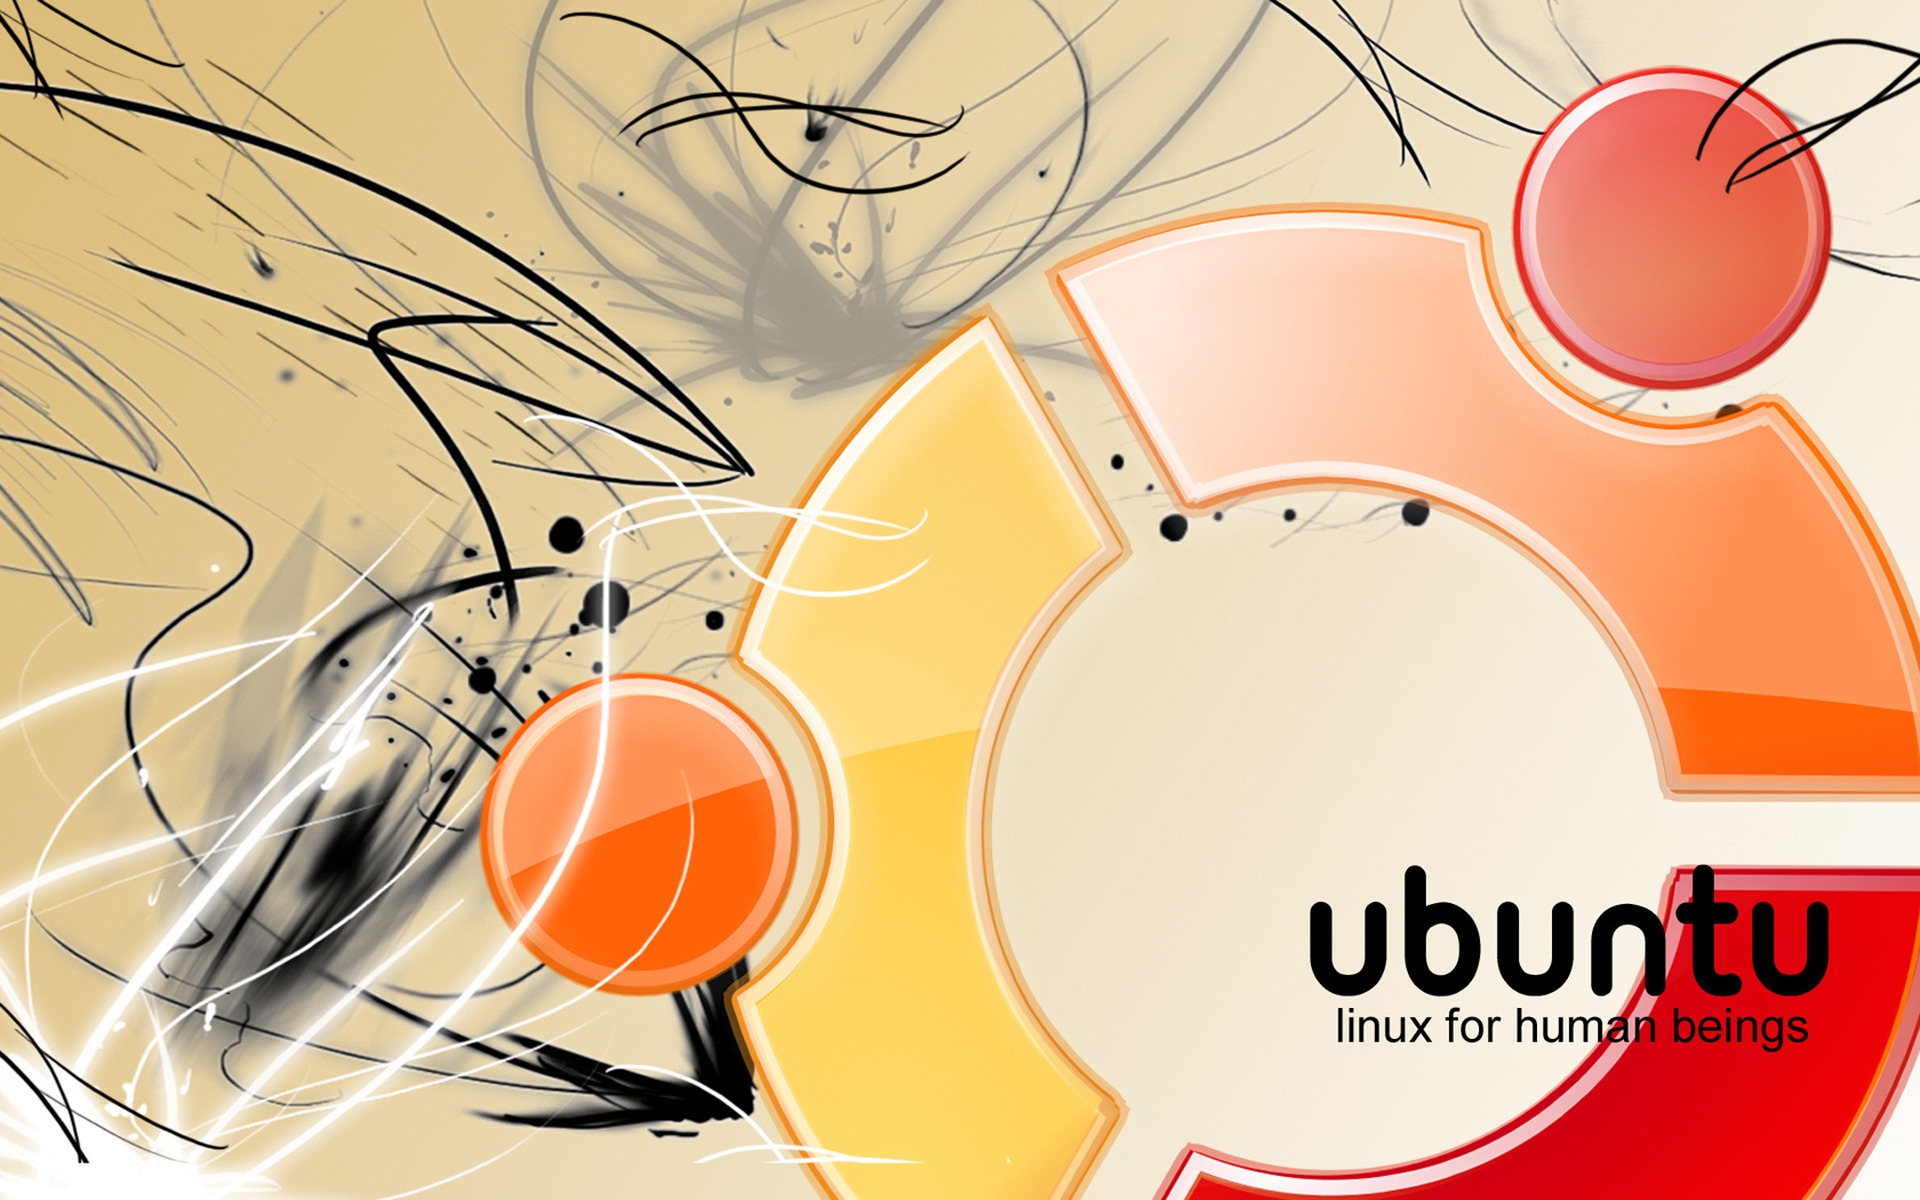 Ubuntu Linux for 1920 x 1200 widescreen resolution